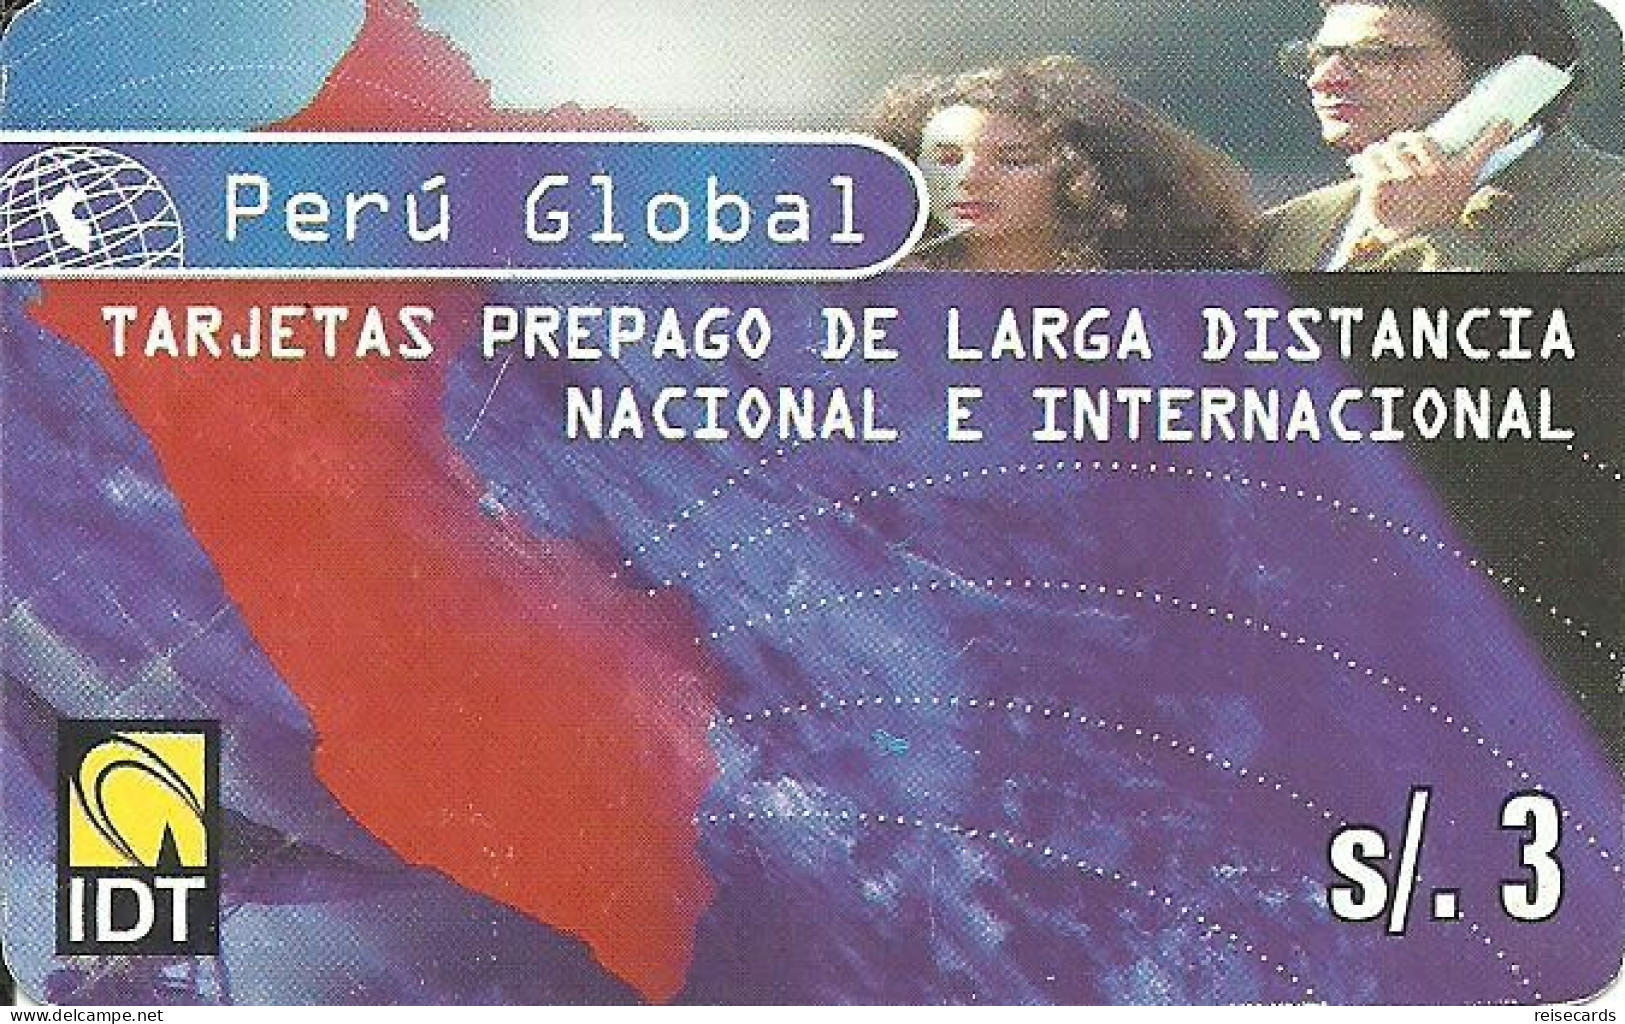 Peru: Prepaid IDT - Alcard Perú Global - Perú